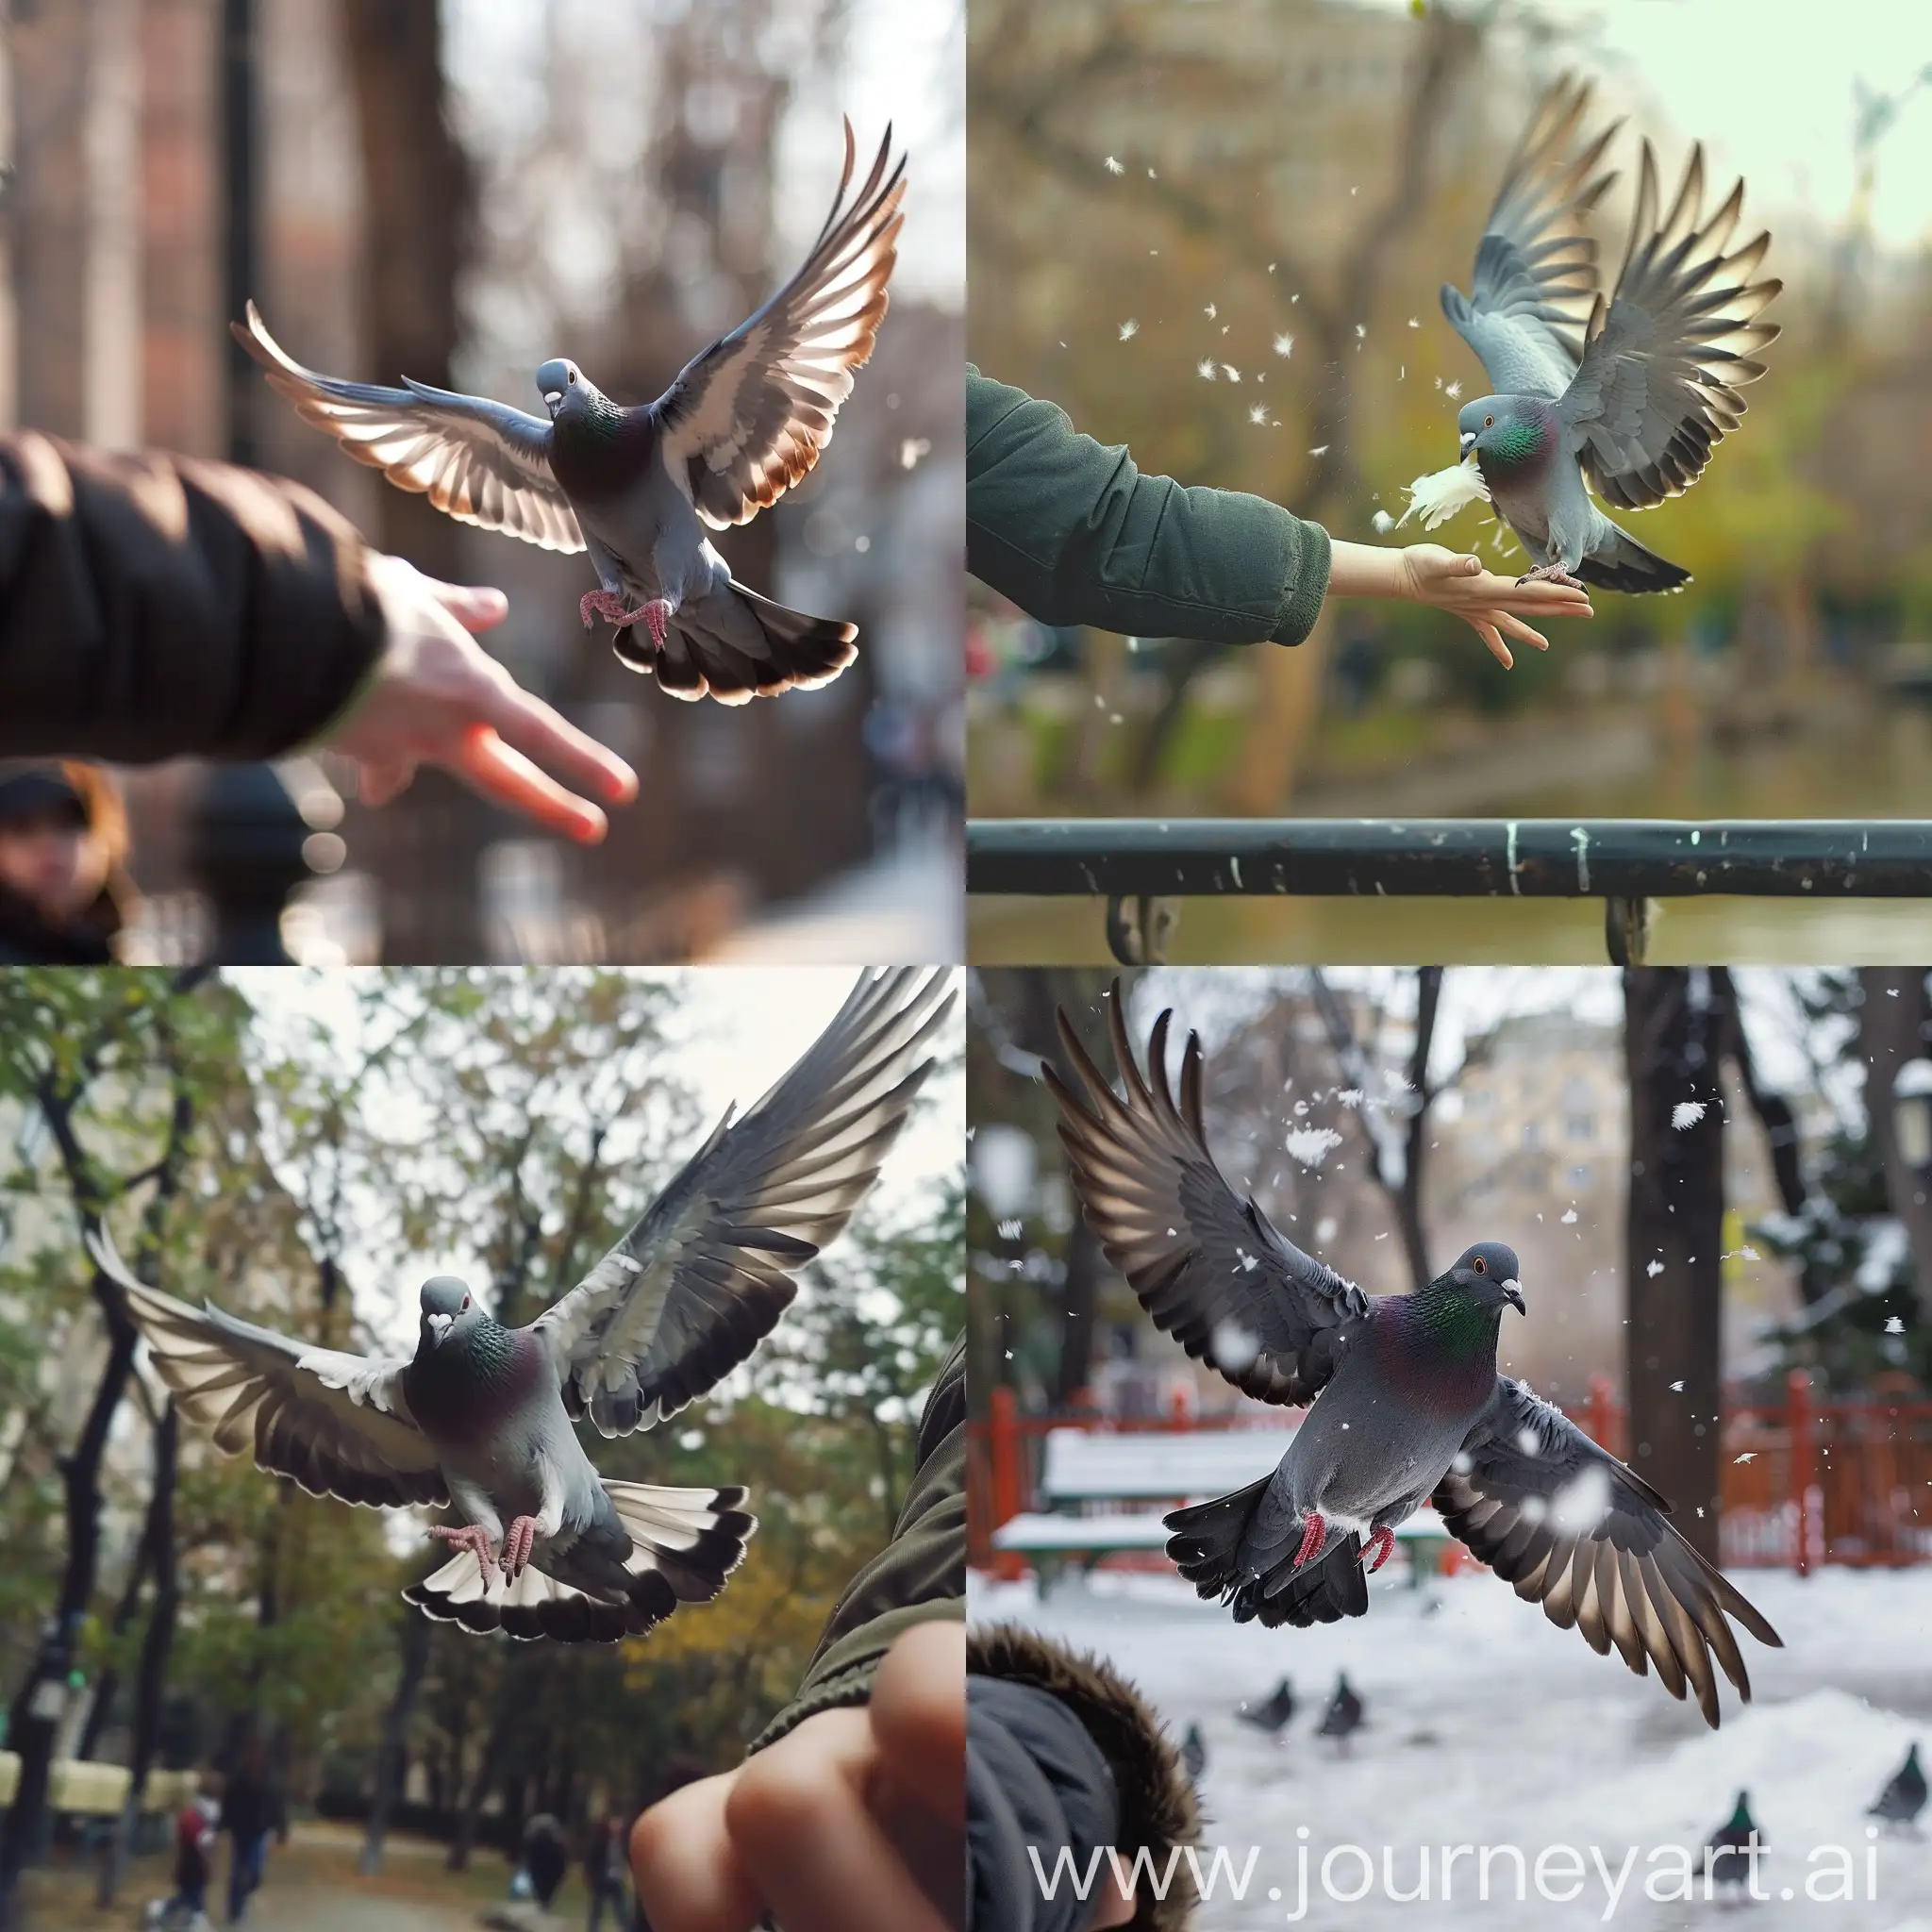 Aggressive-Pigeon-Attack-on-Human